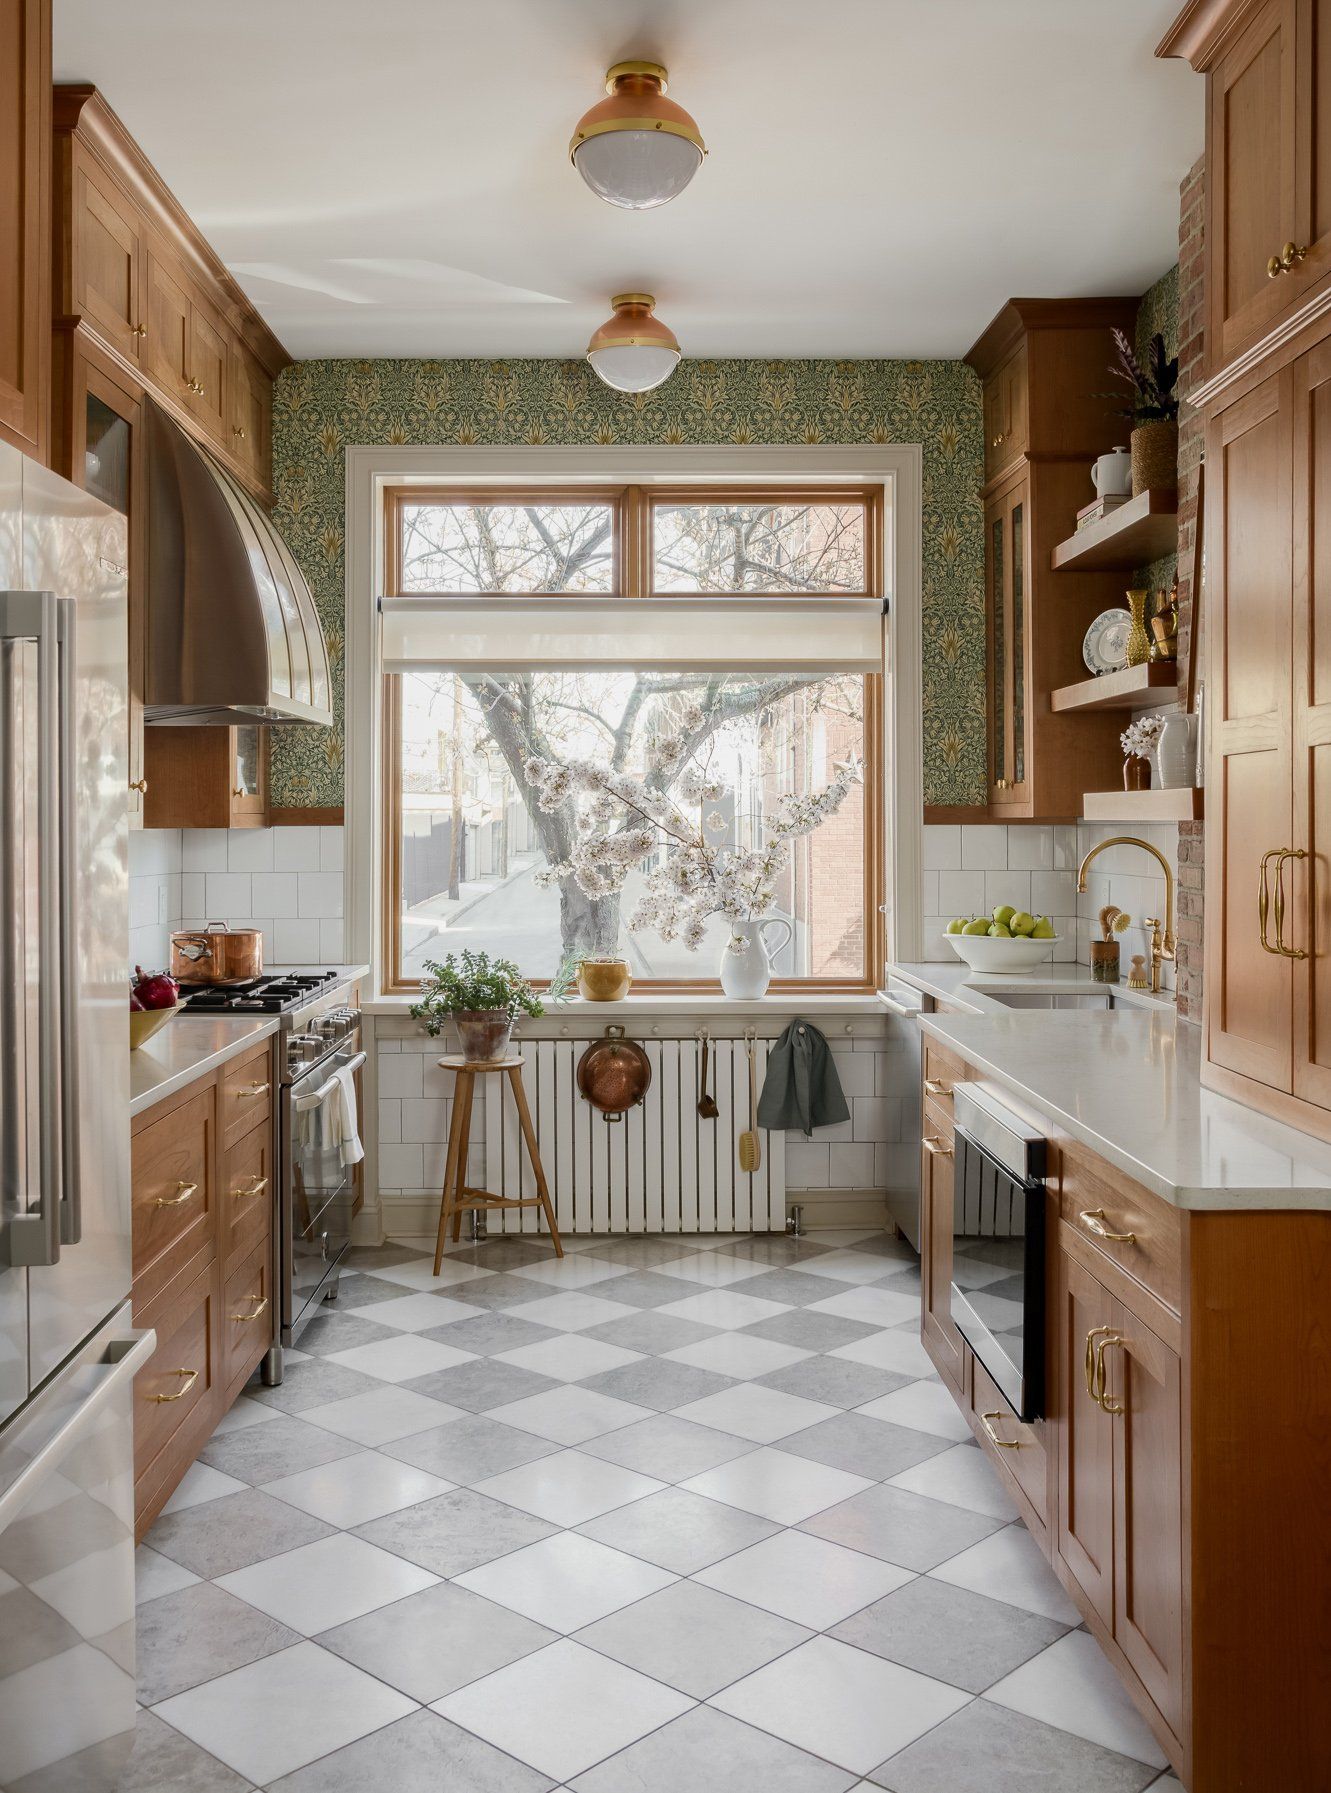 Transform Your Kitchen with Stunning Wallpaper Designs